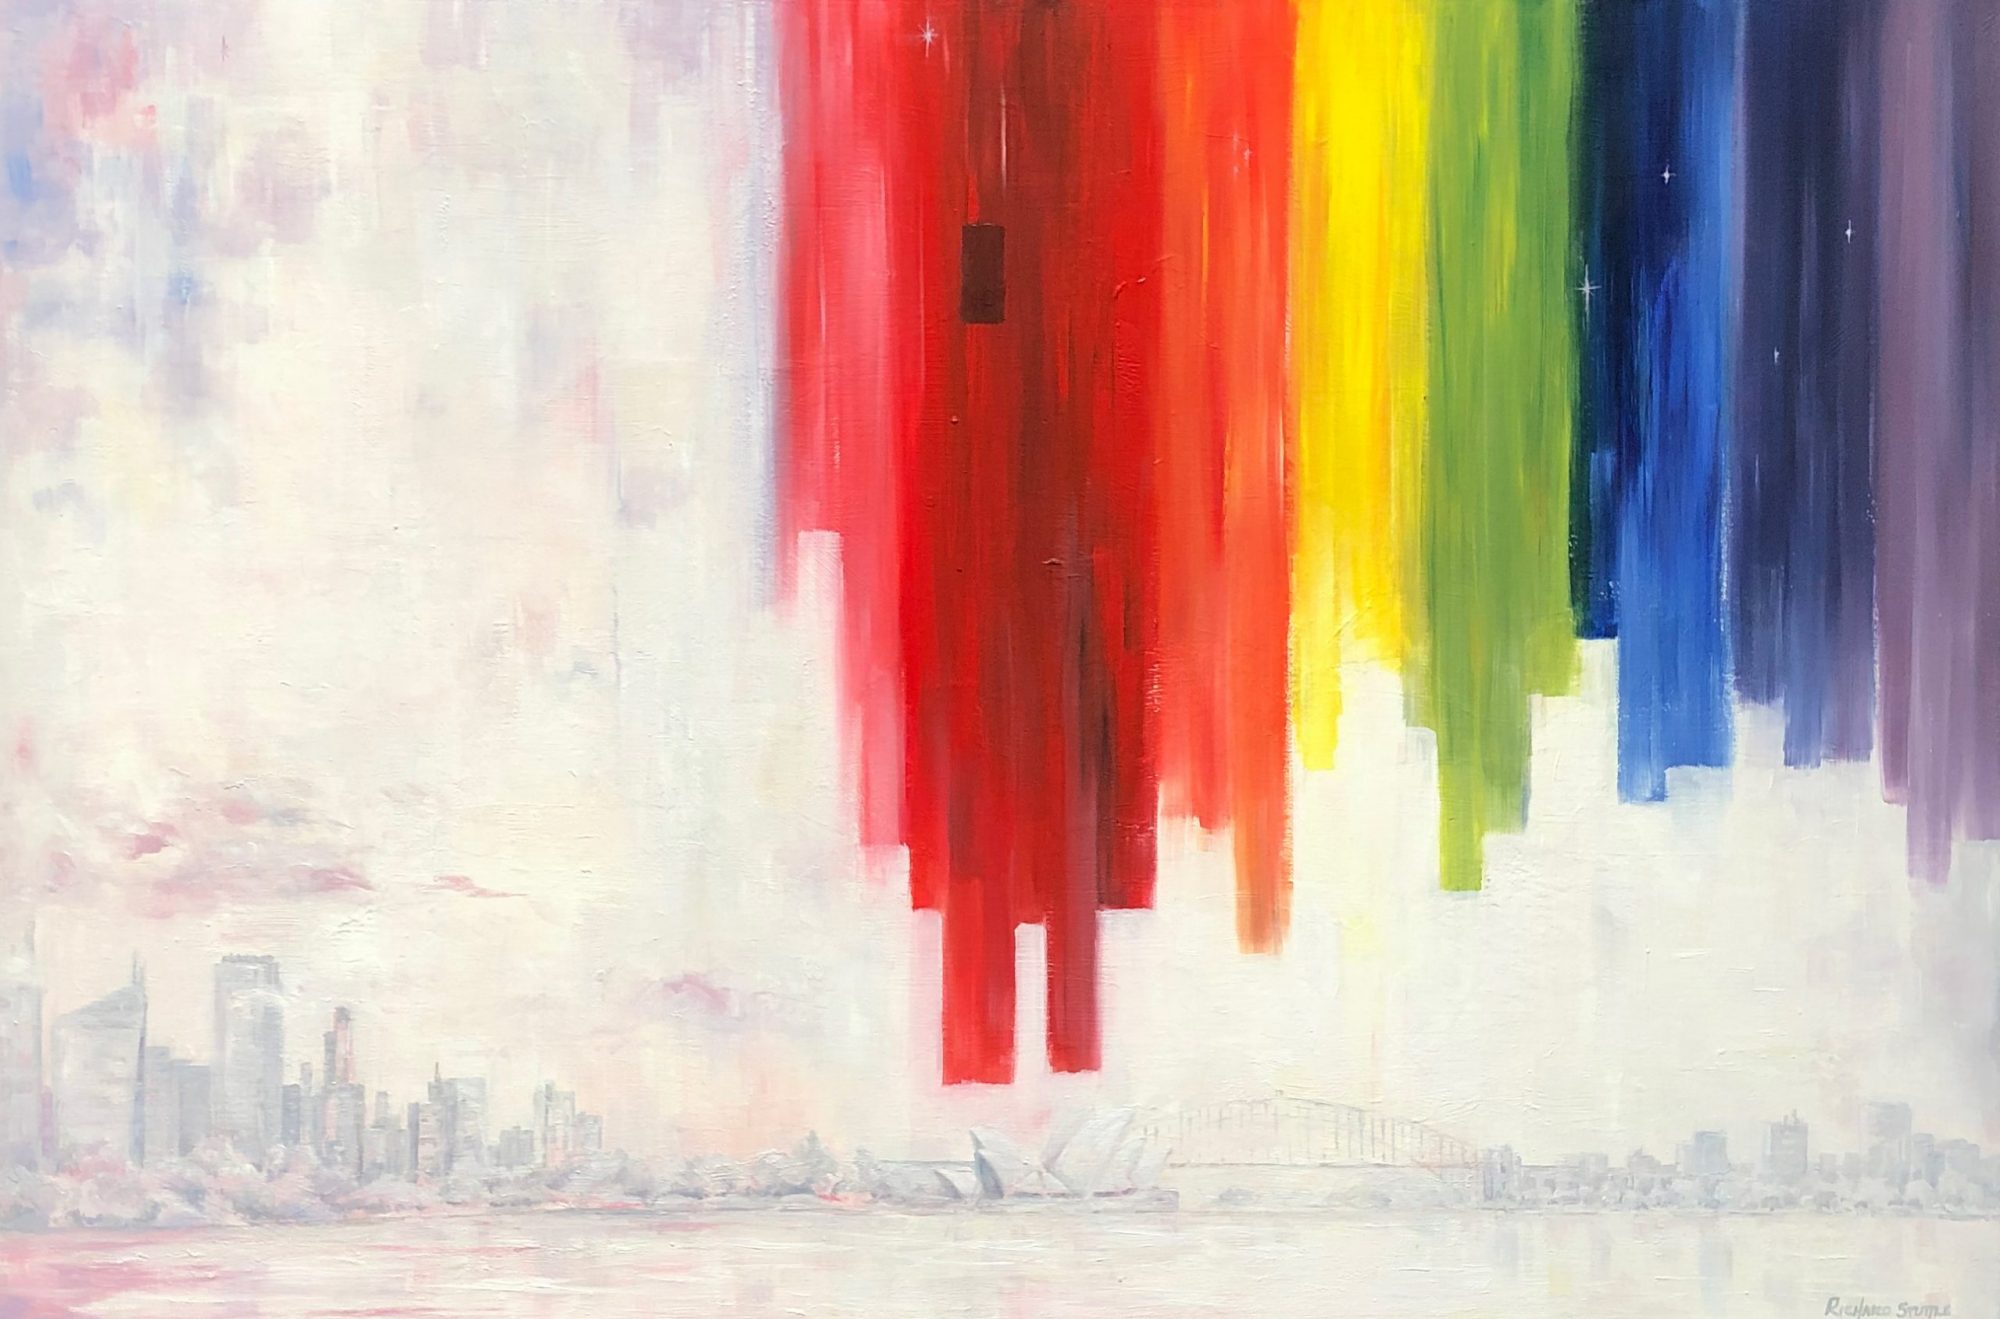 Chasing Rainbows Art by Richard Stuttle